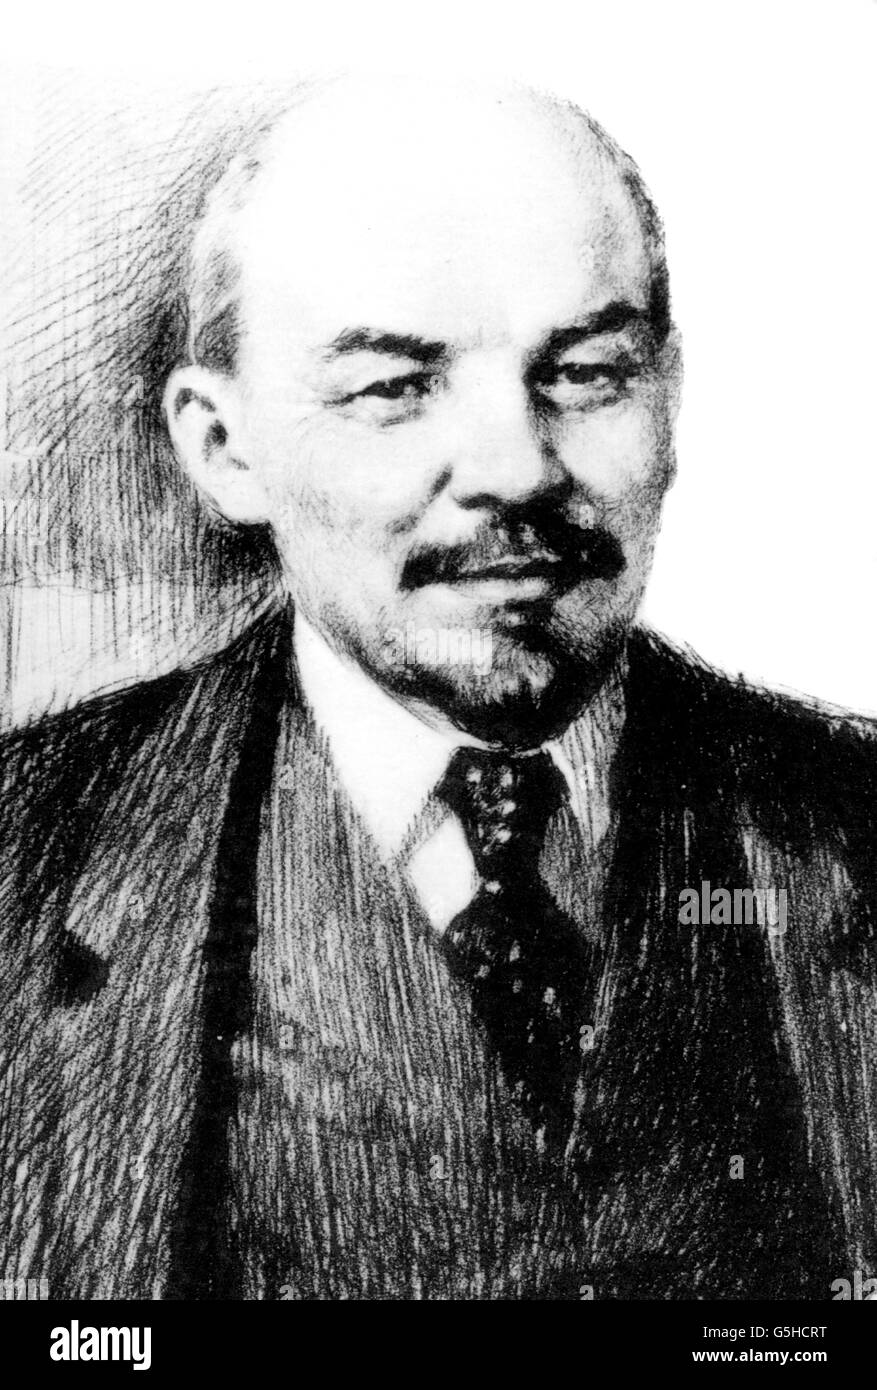 Lenin (Vladimir Ilyich Ulyanov), 22.4.1870 - 21.1.1924, Russian politician, portrait, 1920s, drawing, Stock Photo